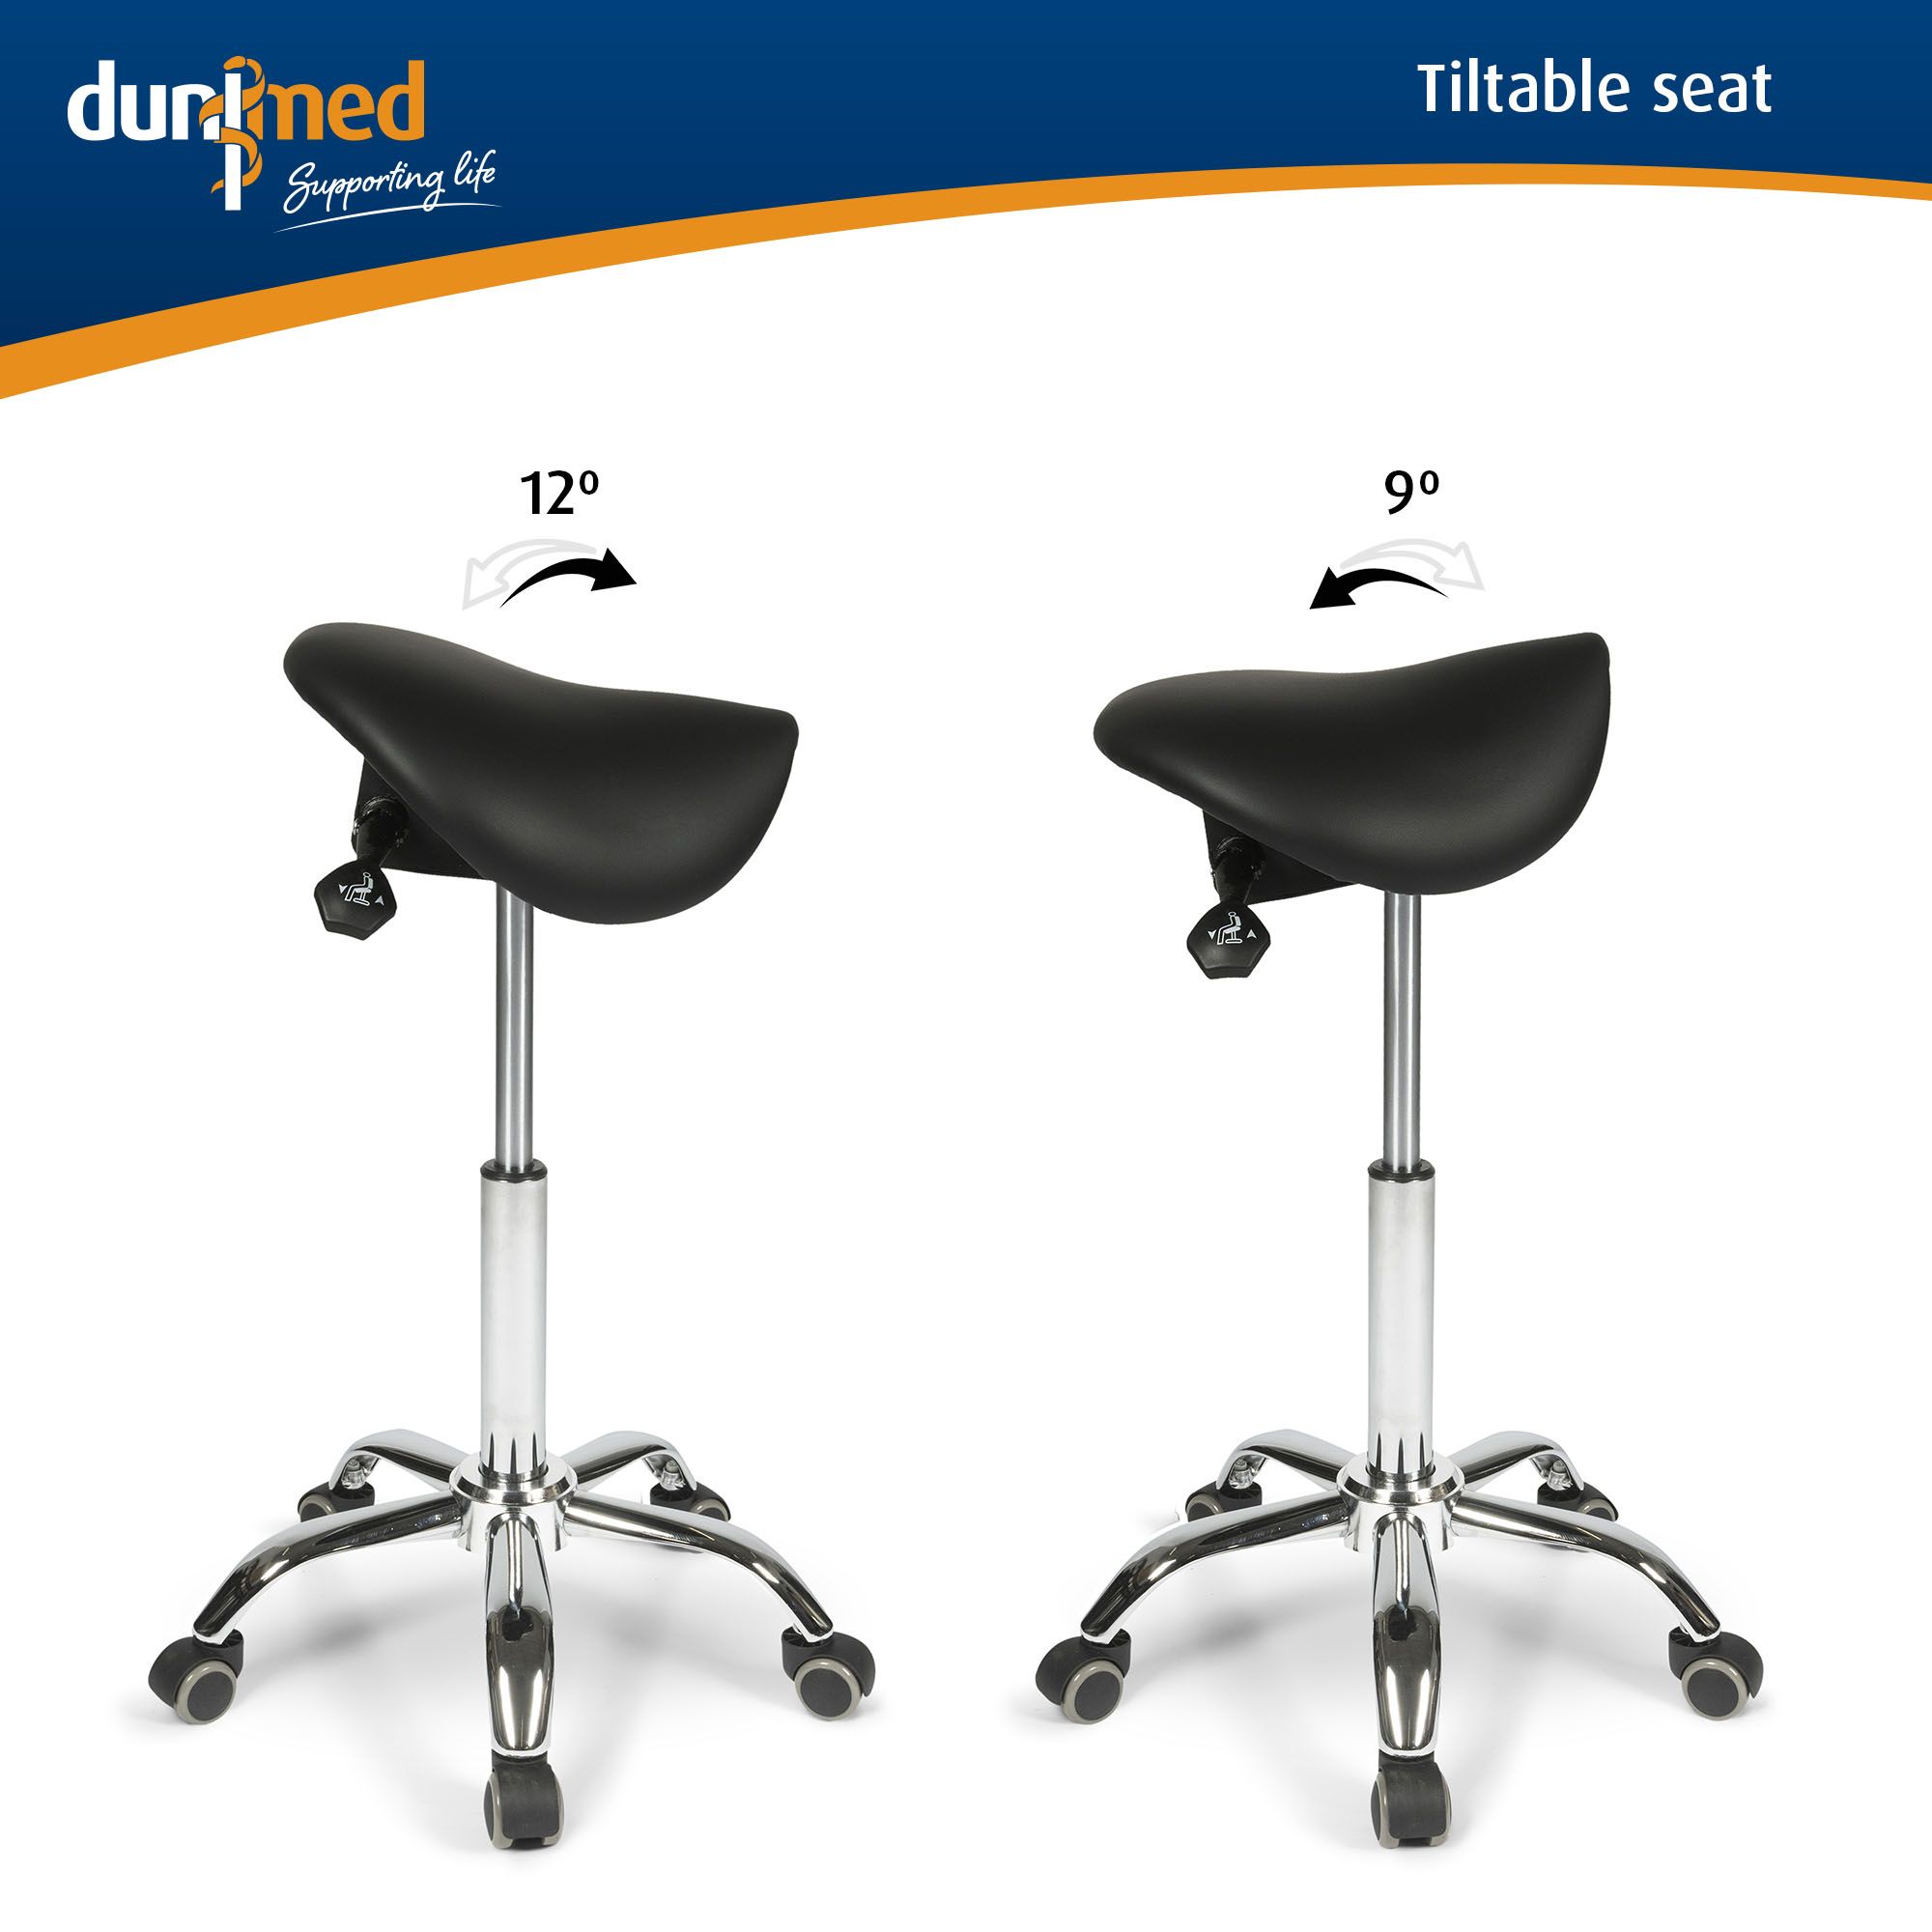 Dunimed - Ergonomic Saddle Stool with Tiltable Seat